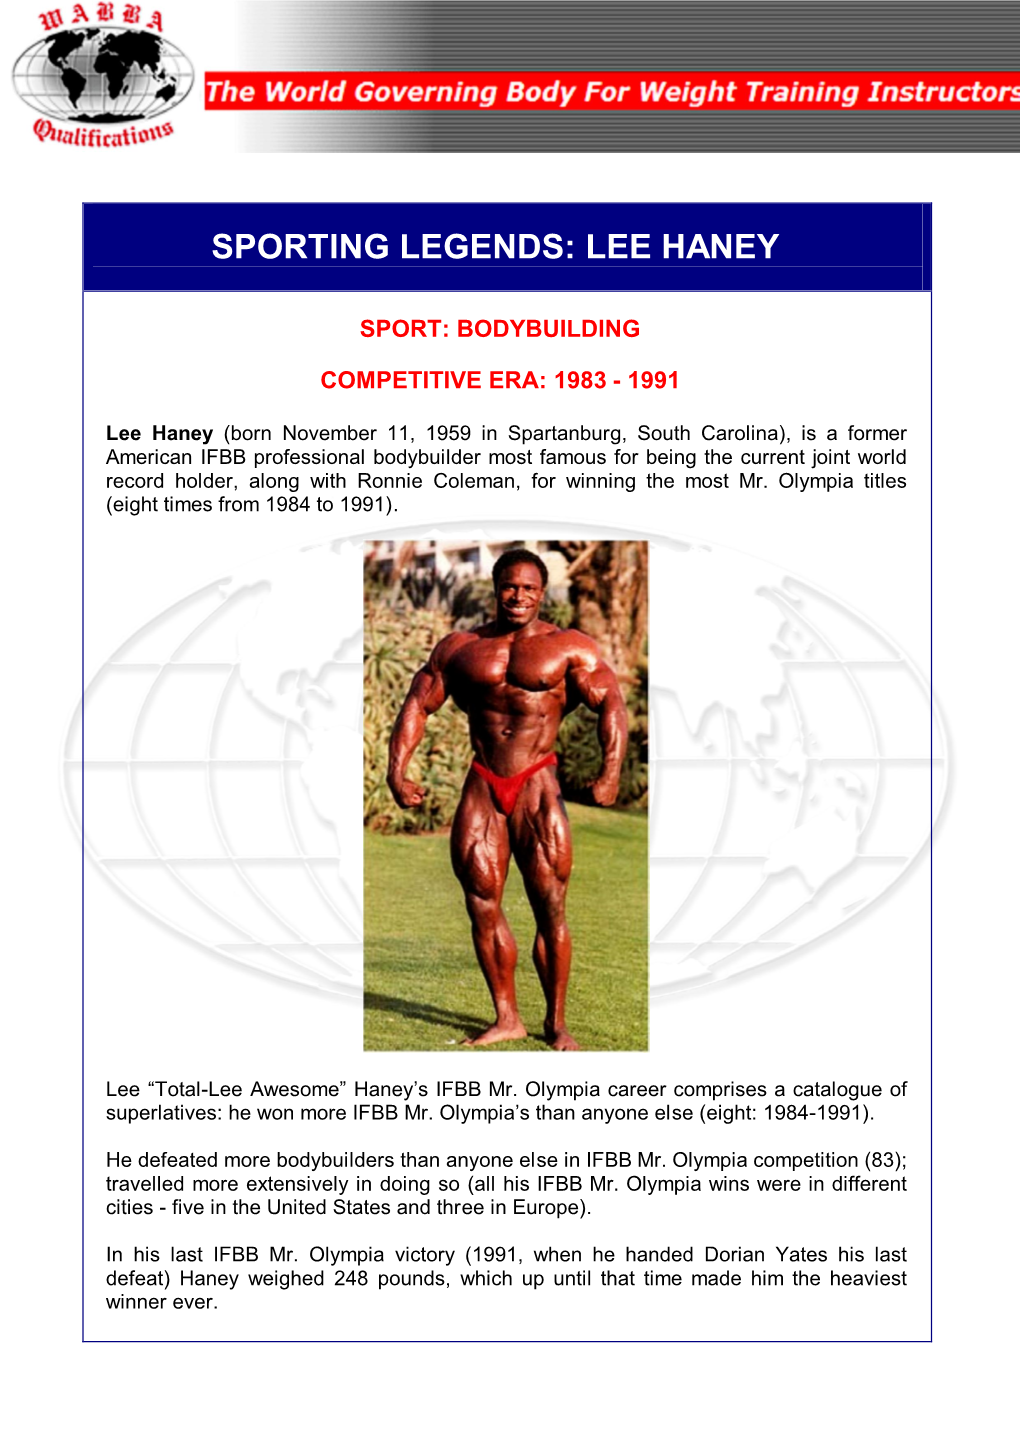 Sporting Legends: Lee Haney